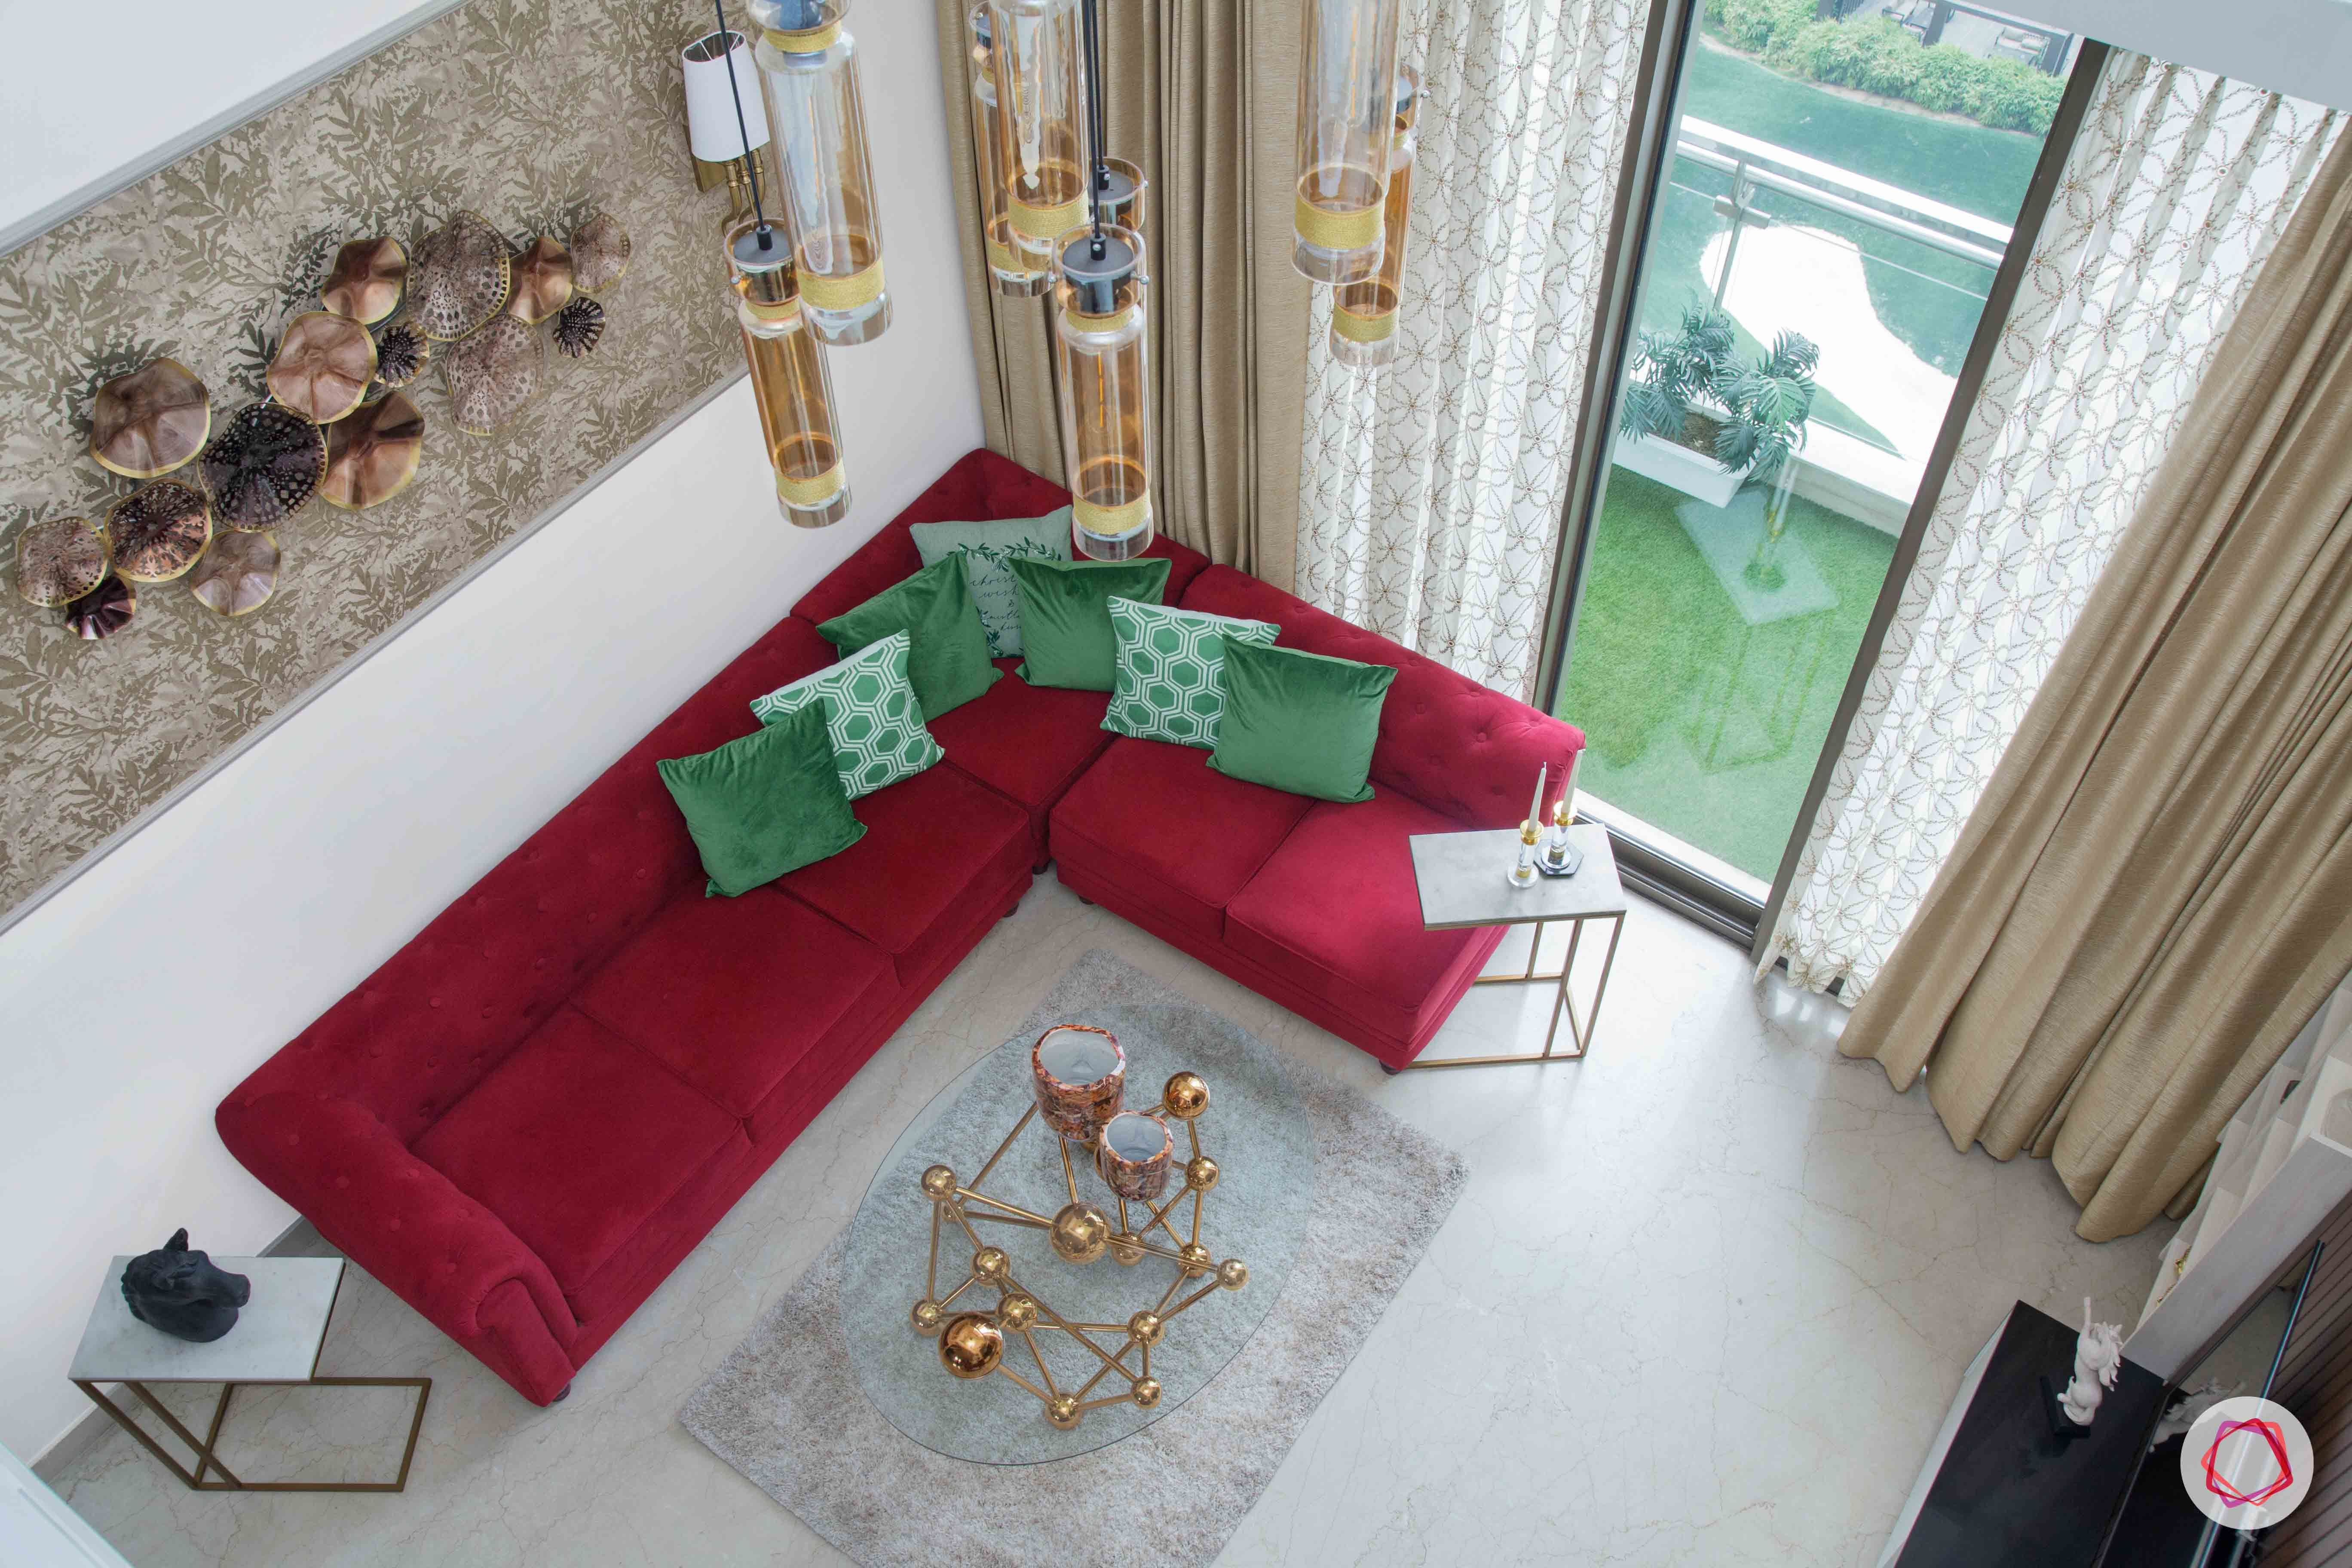 duplex house images-duplex house designs-red sofa designs-marble flooring ideas